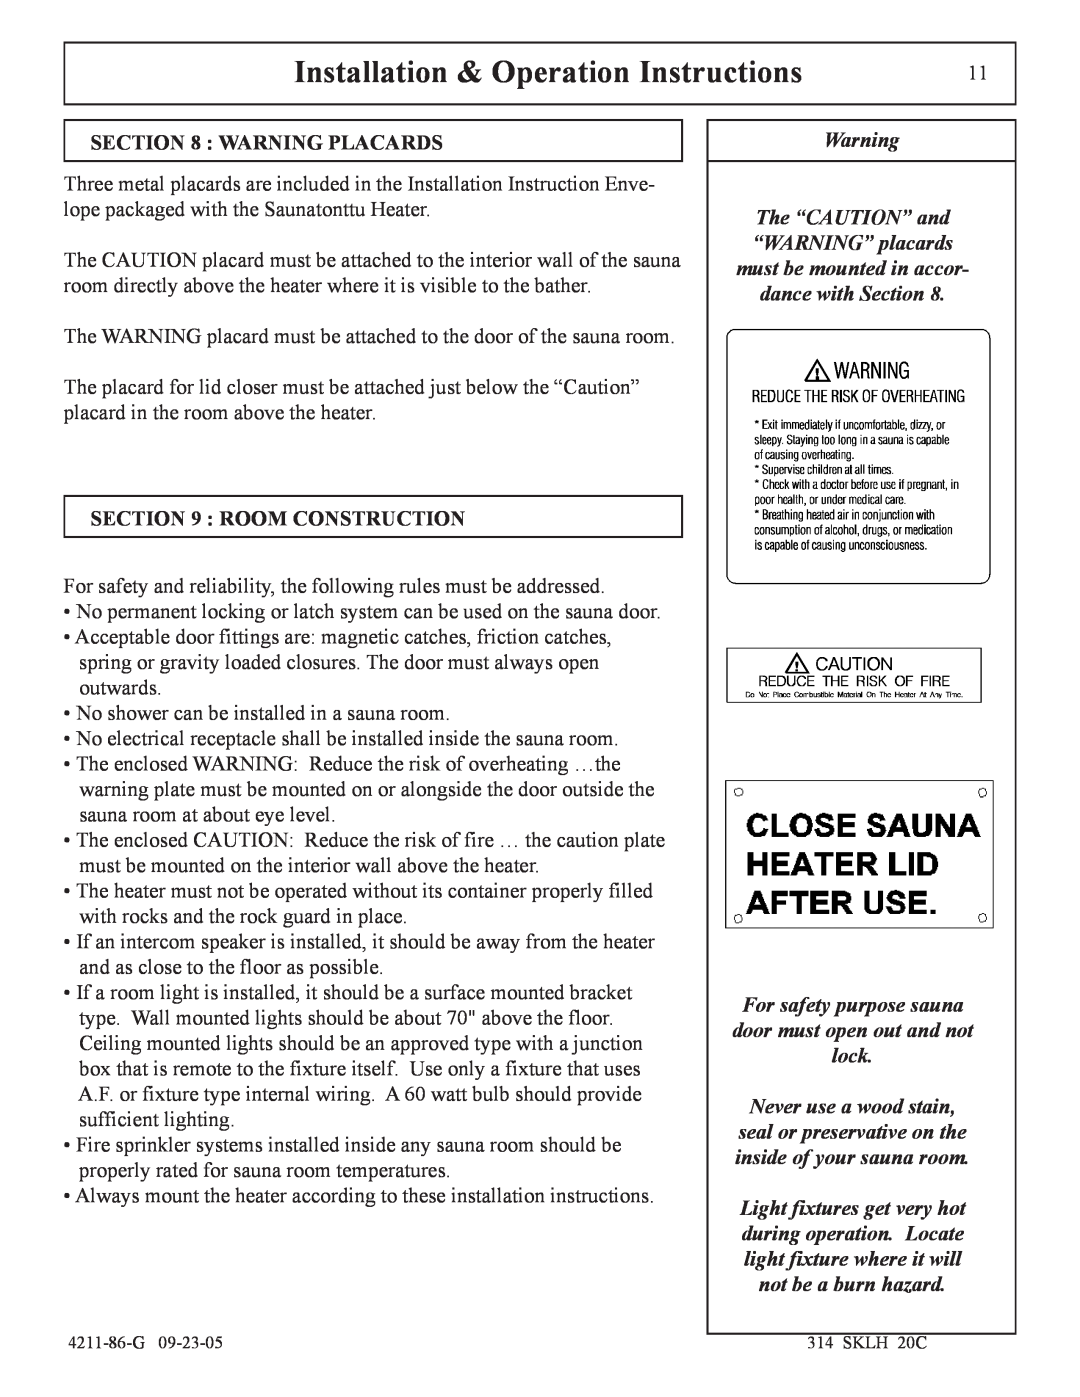 Saunatec 1108-46, 1108-60, 1108-24 manual Warning Placards, Room Construction, Installation & Operation Instructions 